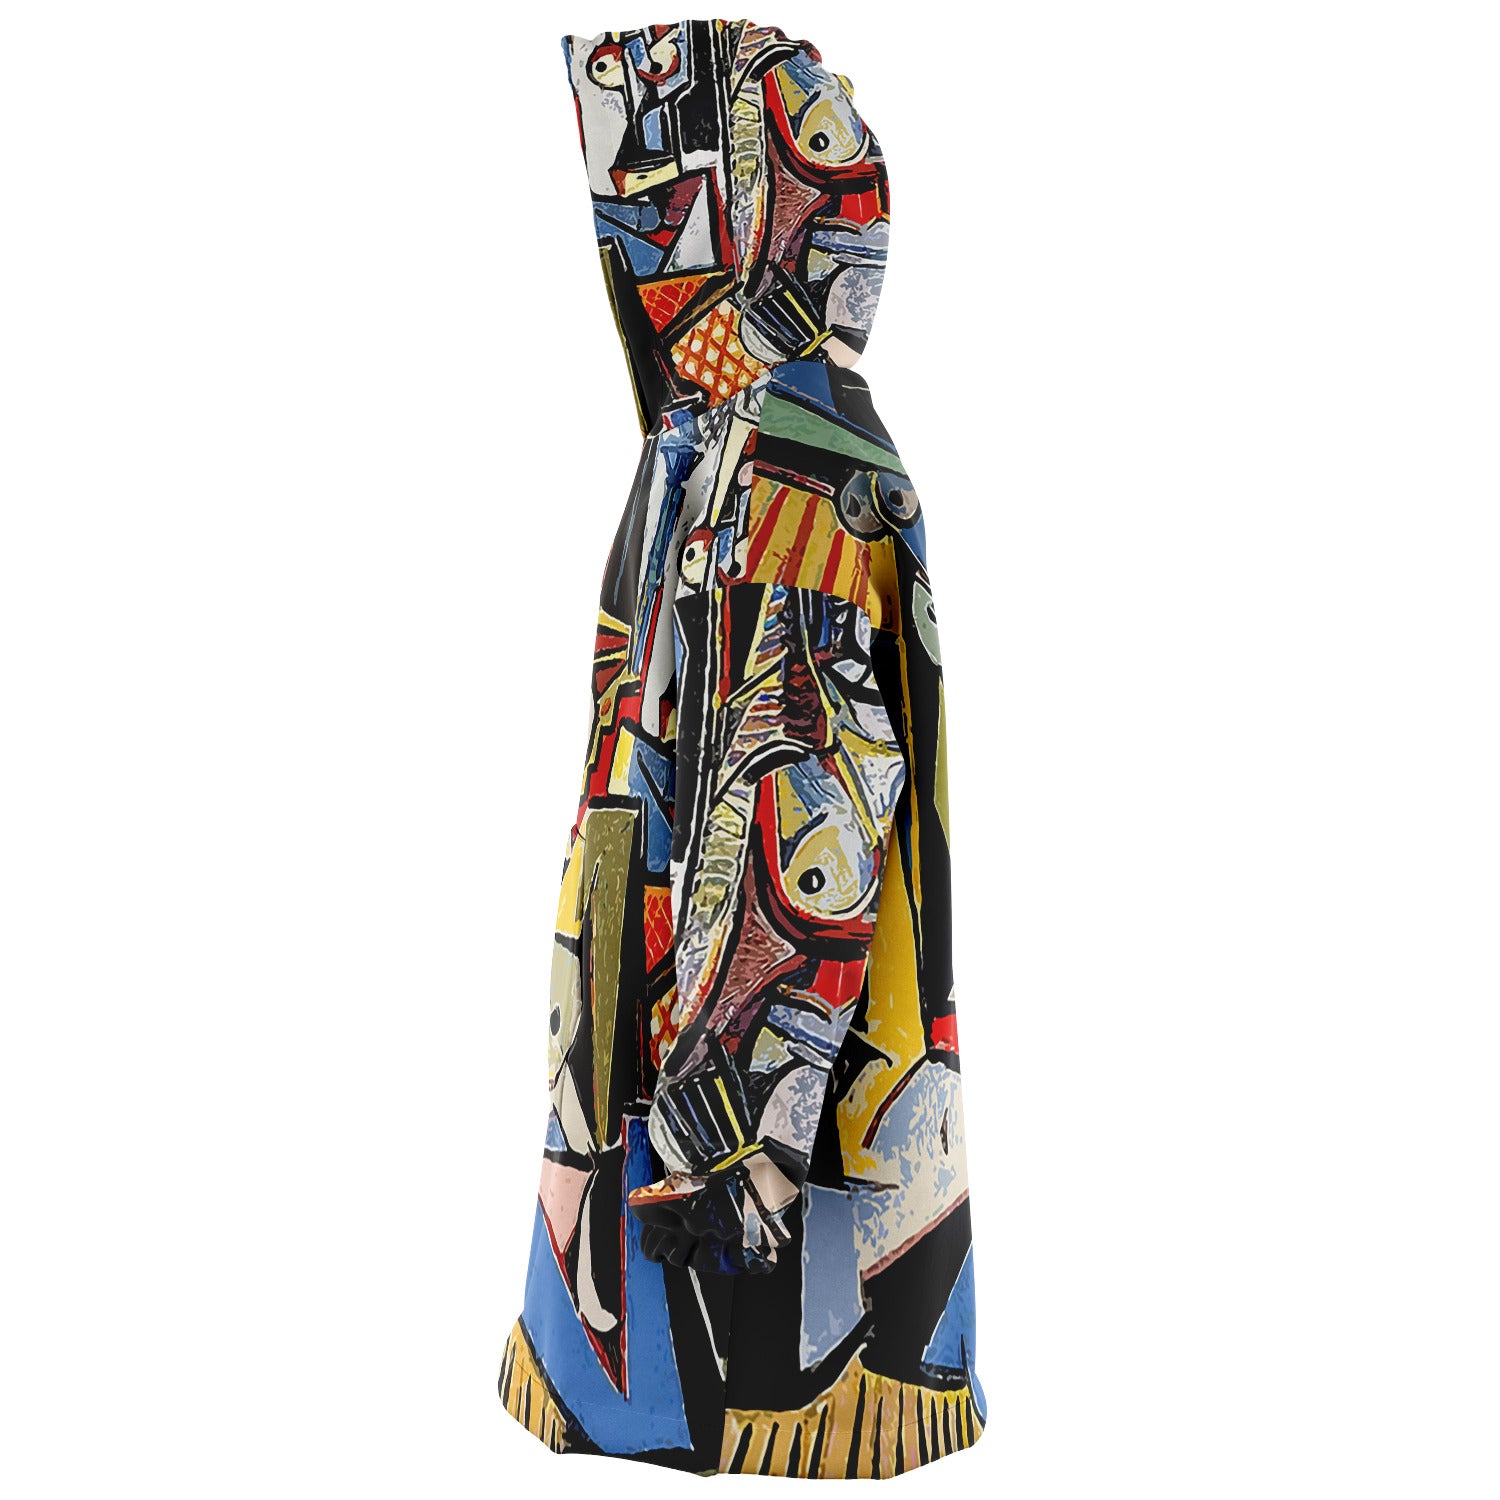 Les Femmes d'Alger Picasso Snug Hoodie – Galartsy